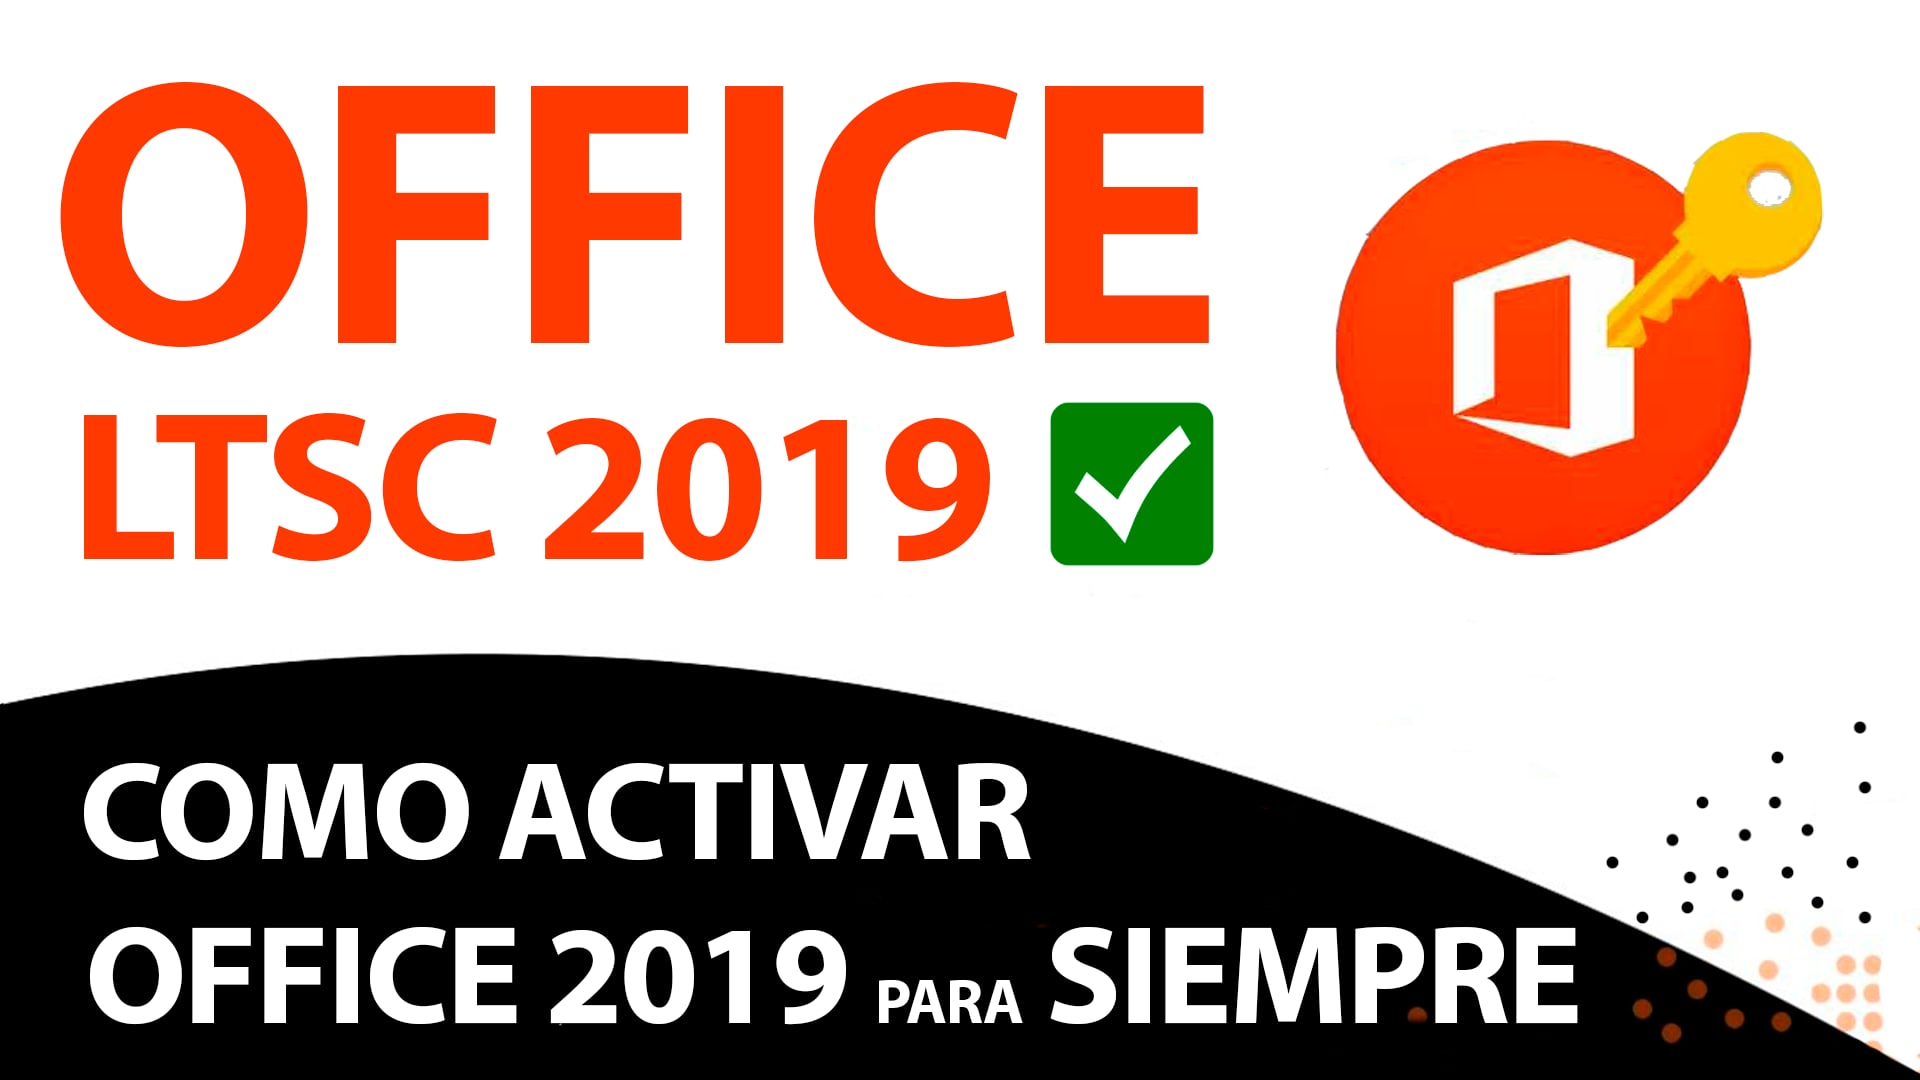 Activacion Office LTSC | Activador Office 2019 64 bits | Como Activar  Microsoft Office 2019 para Siempre on Vimeo